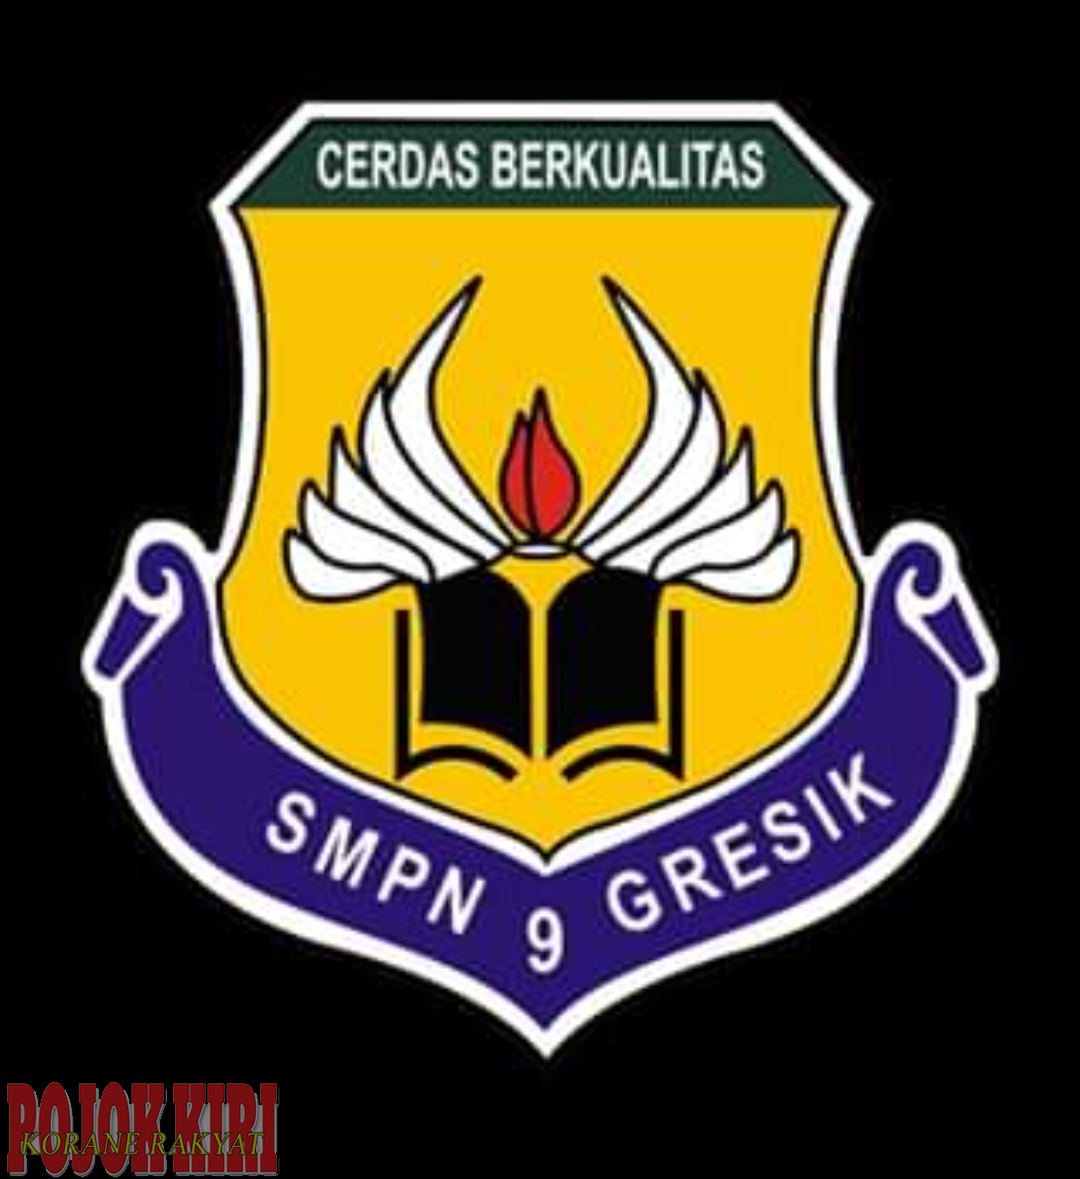 Spensaba Berubah Nama Jadi SMPN 9 Gresik - Pojokkiri.com